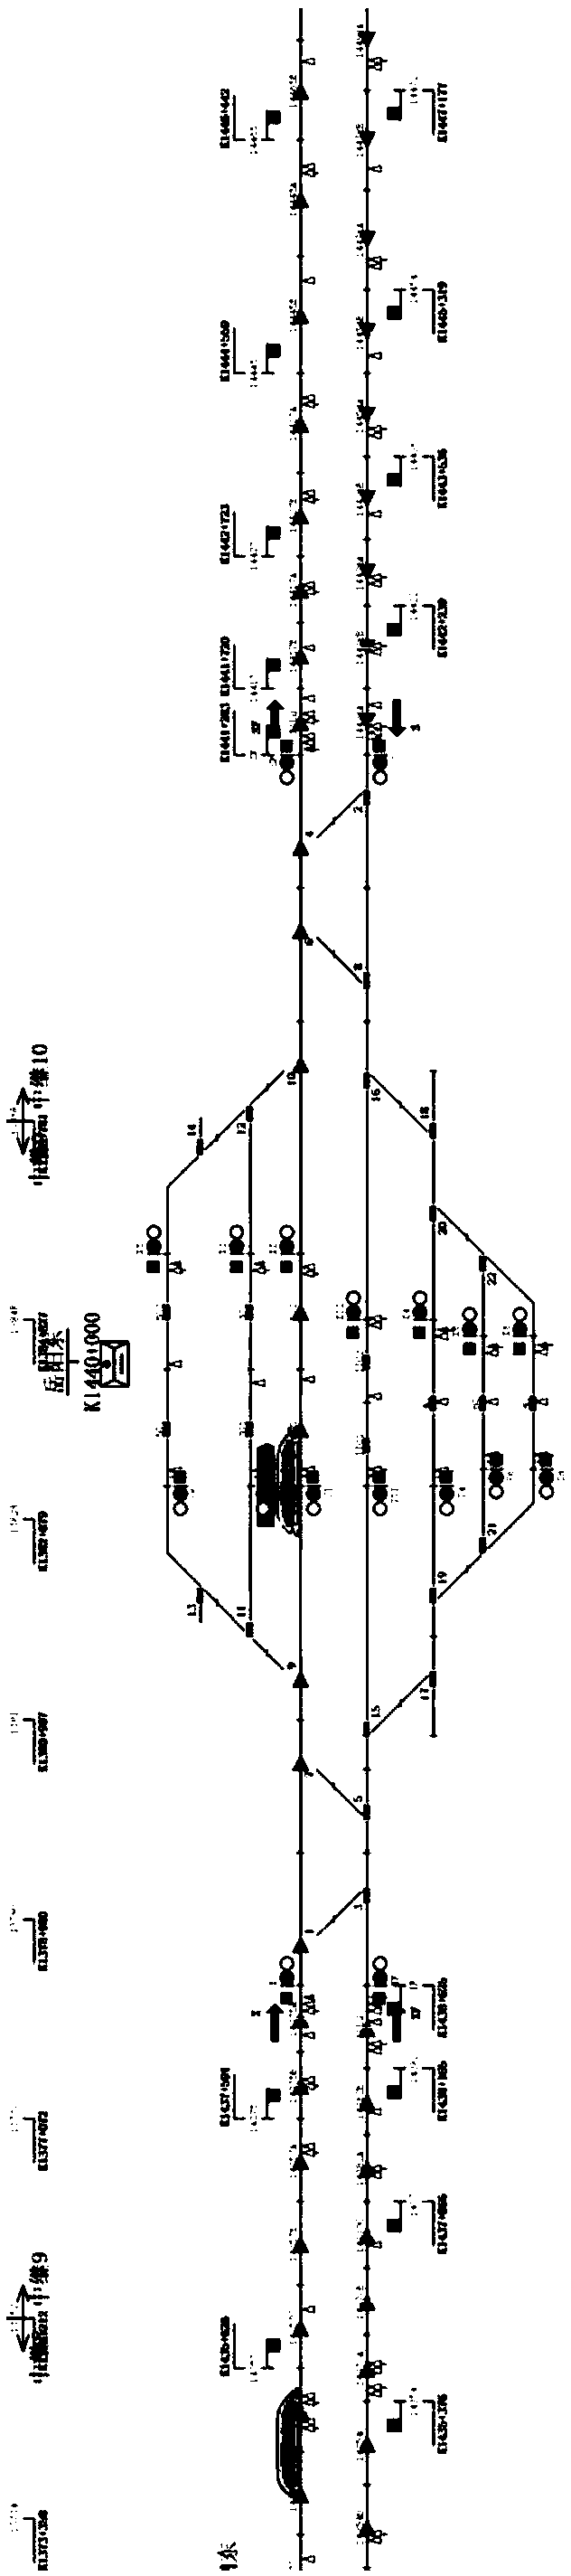 Railway line condition simulation method and simulation system